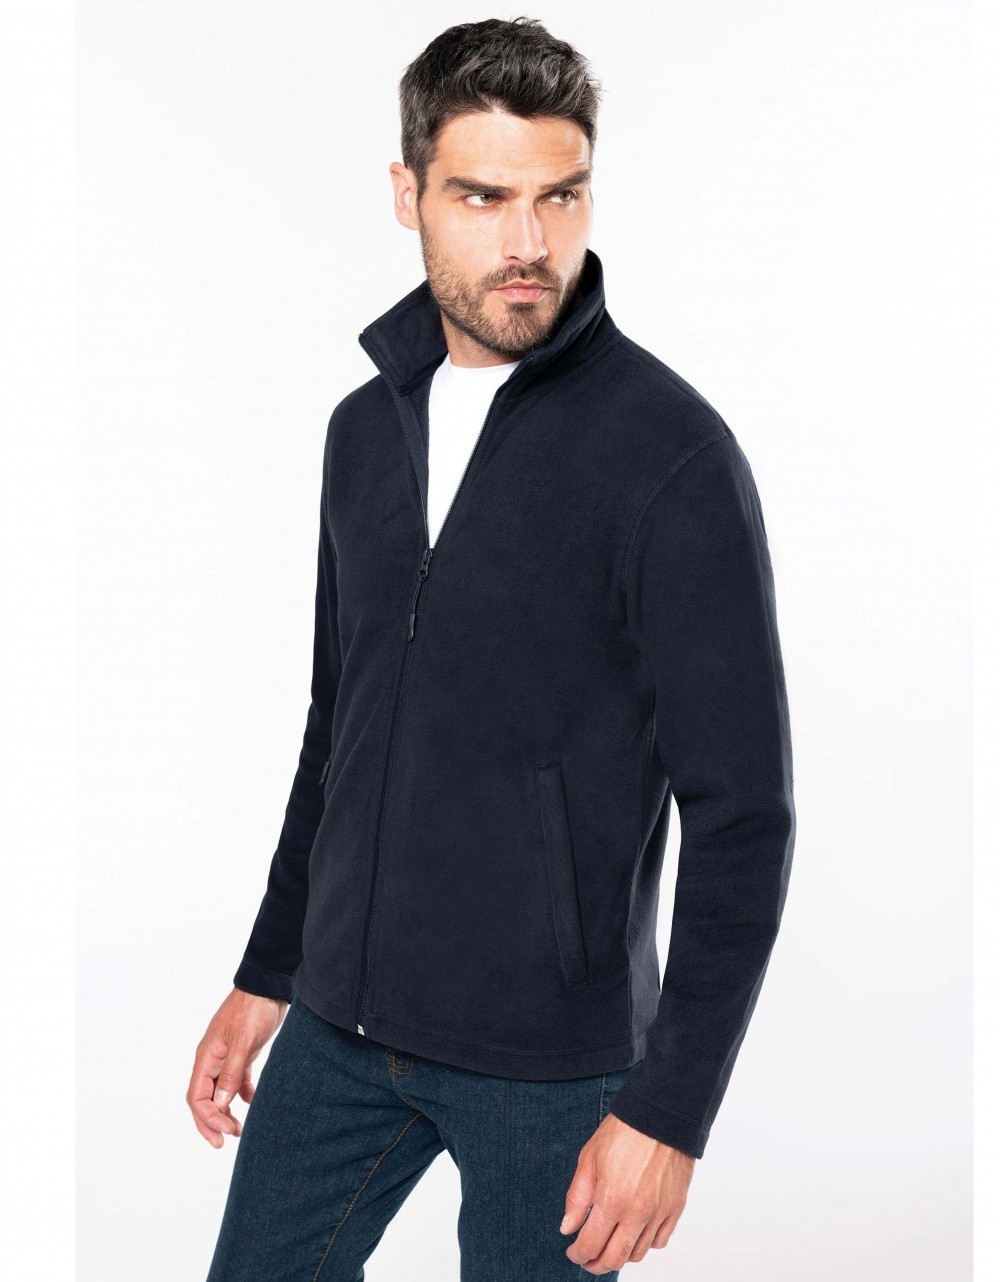 Jackets > Falco jacket - Premium quality